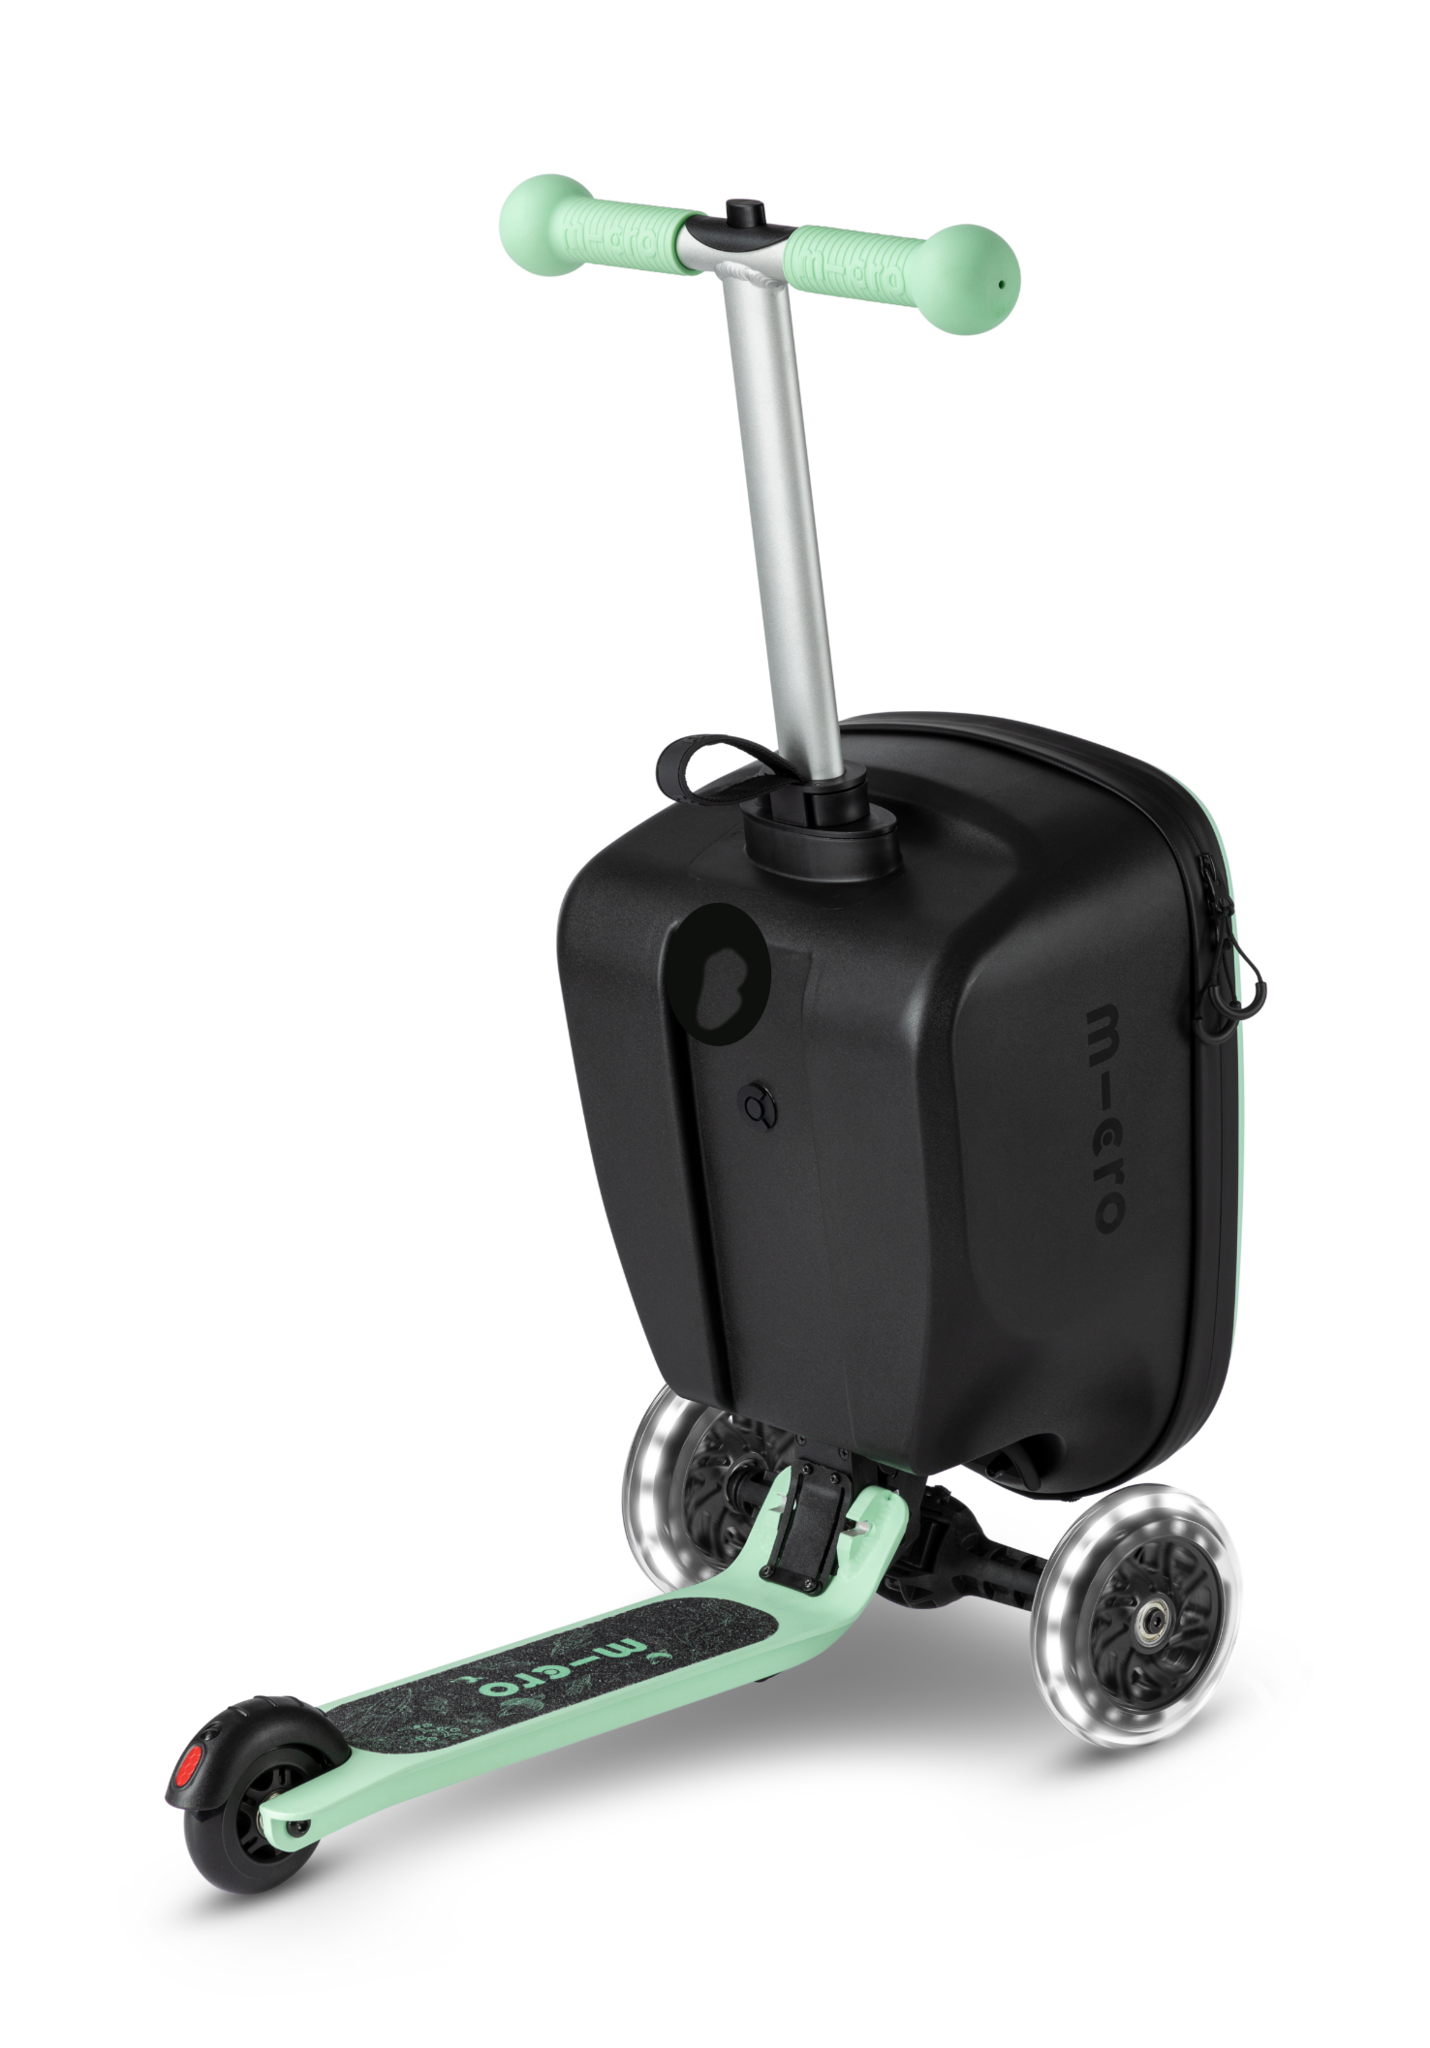 VICI Travel Scooter Bag | Net World Sports